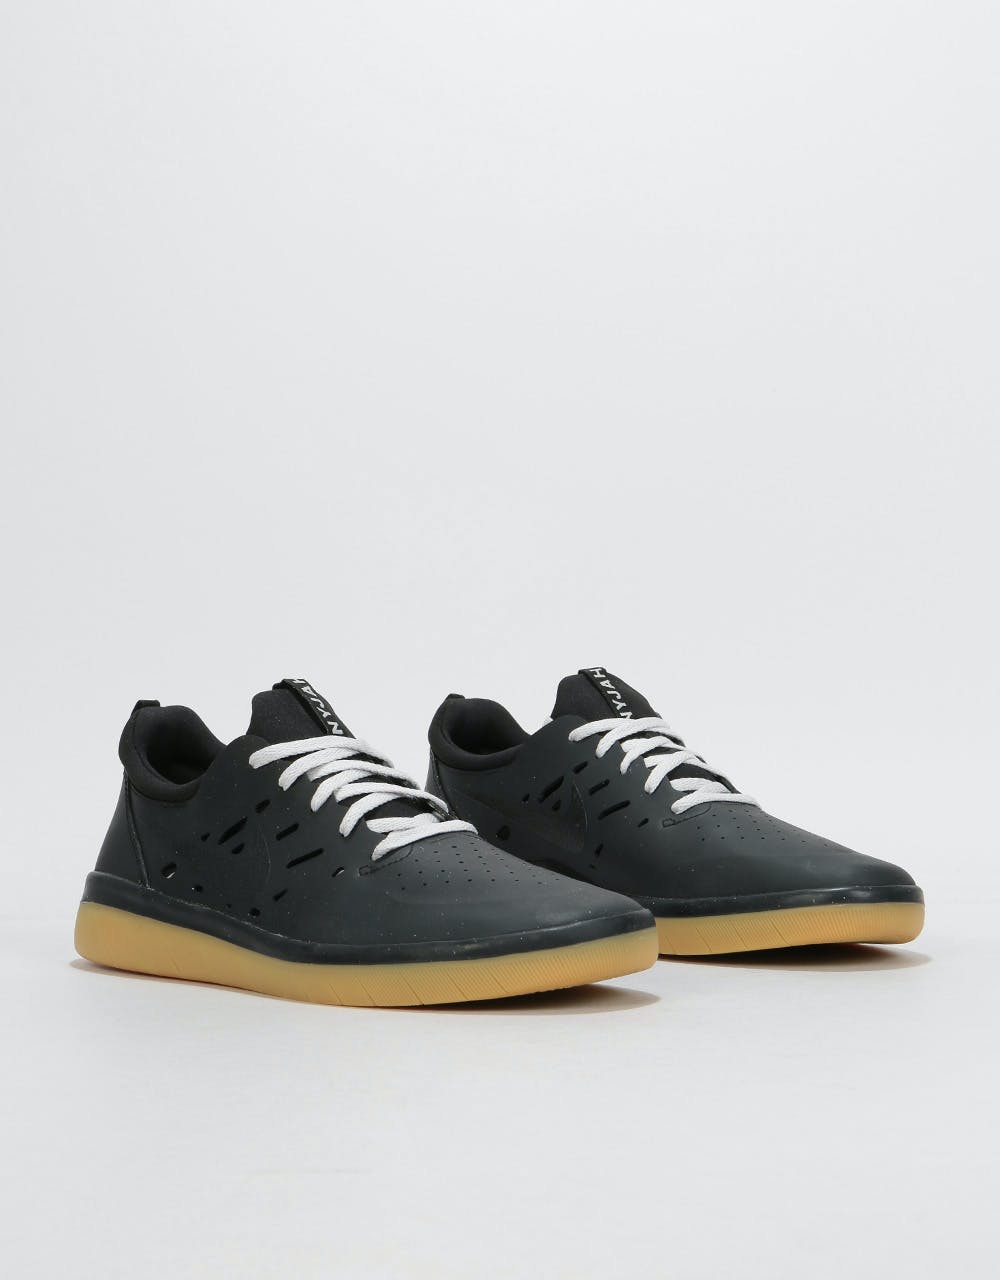 Nike SB Nyjah Free Skate Shoes - Black/Black-Gum Light Brown